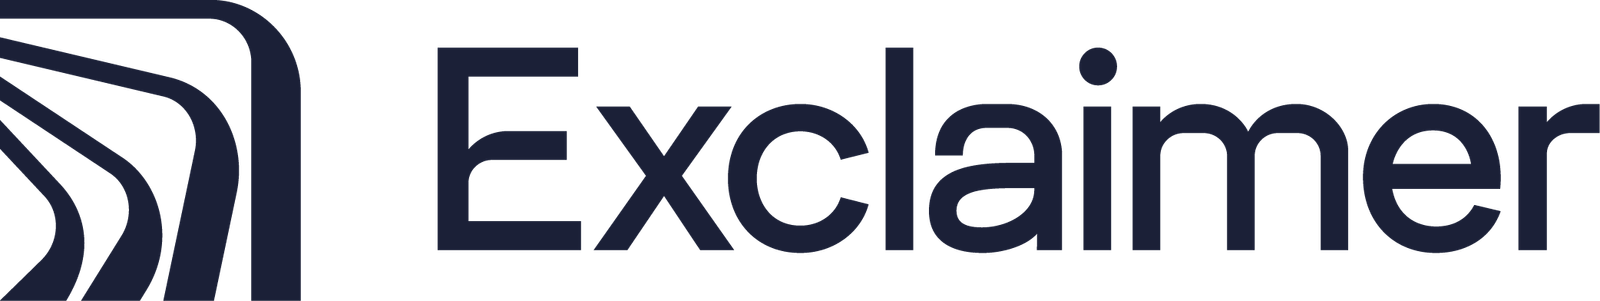 Exclaimer Logo Navy RGB